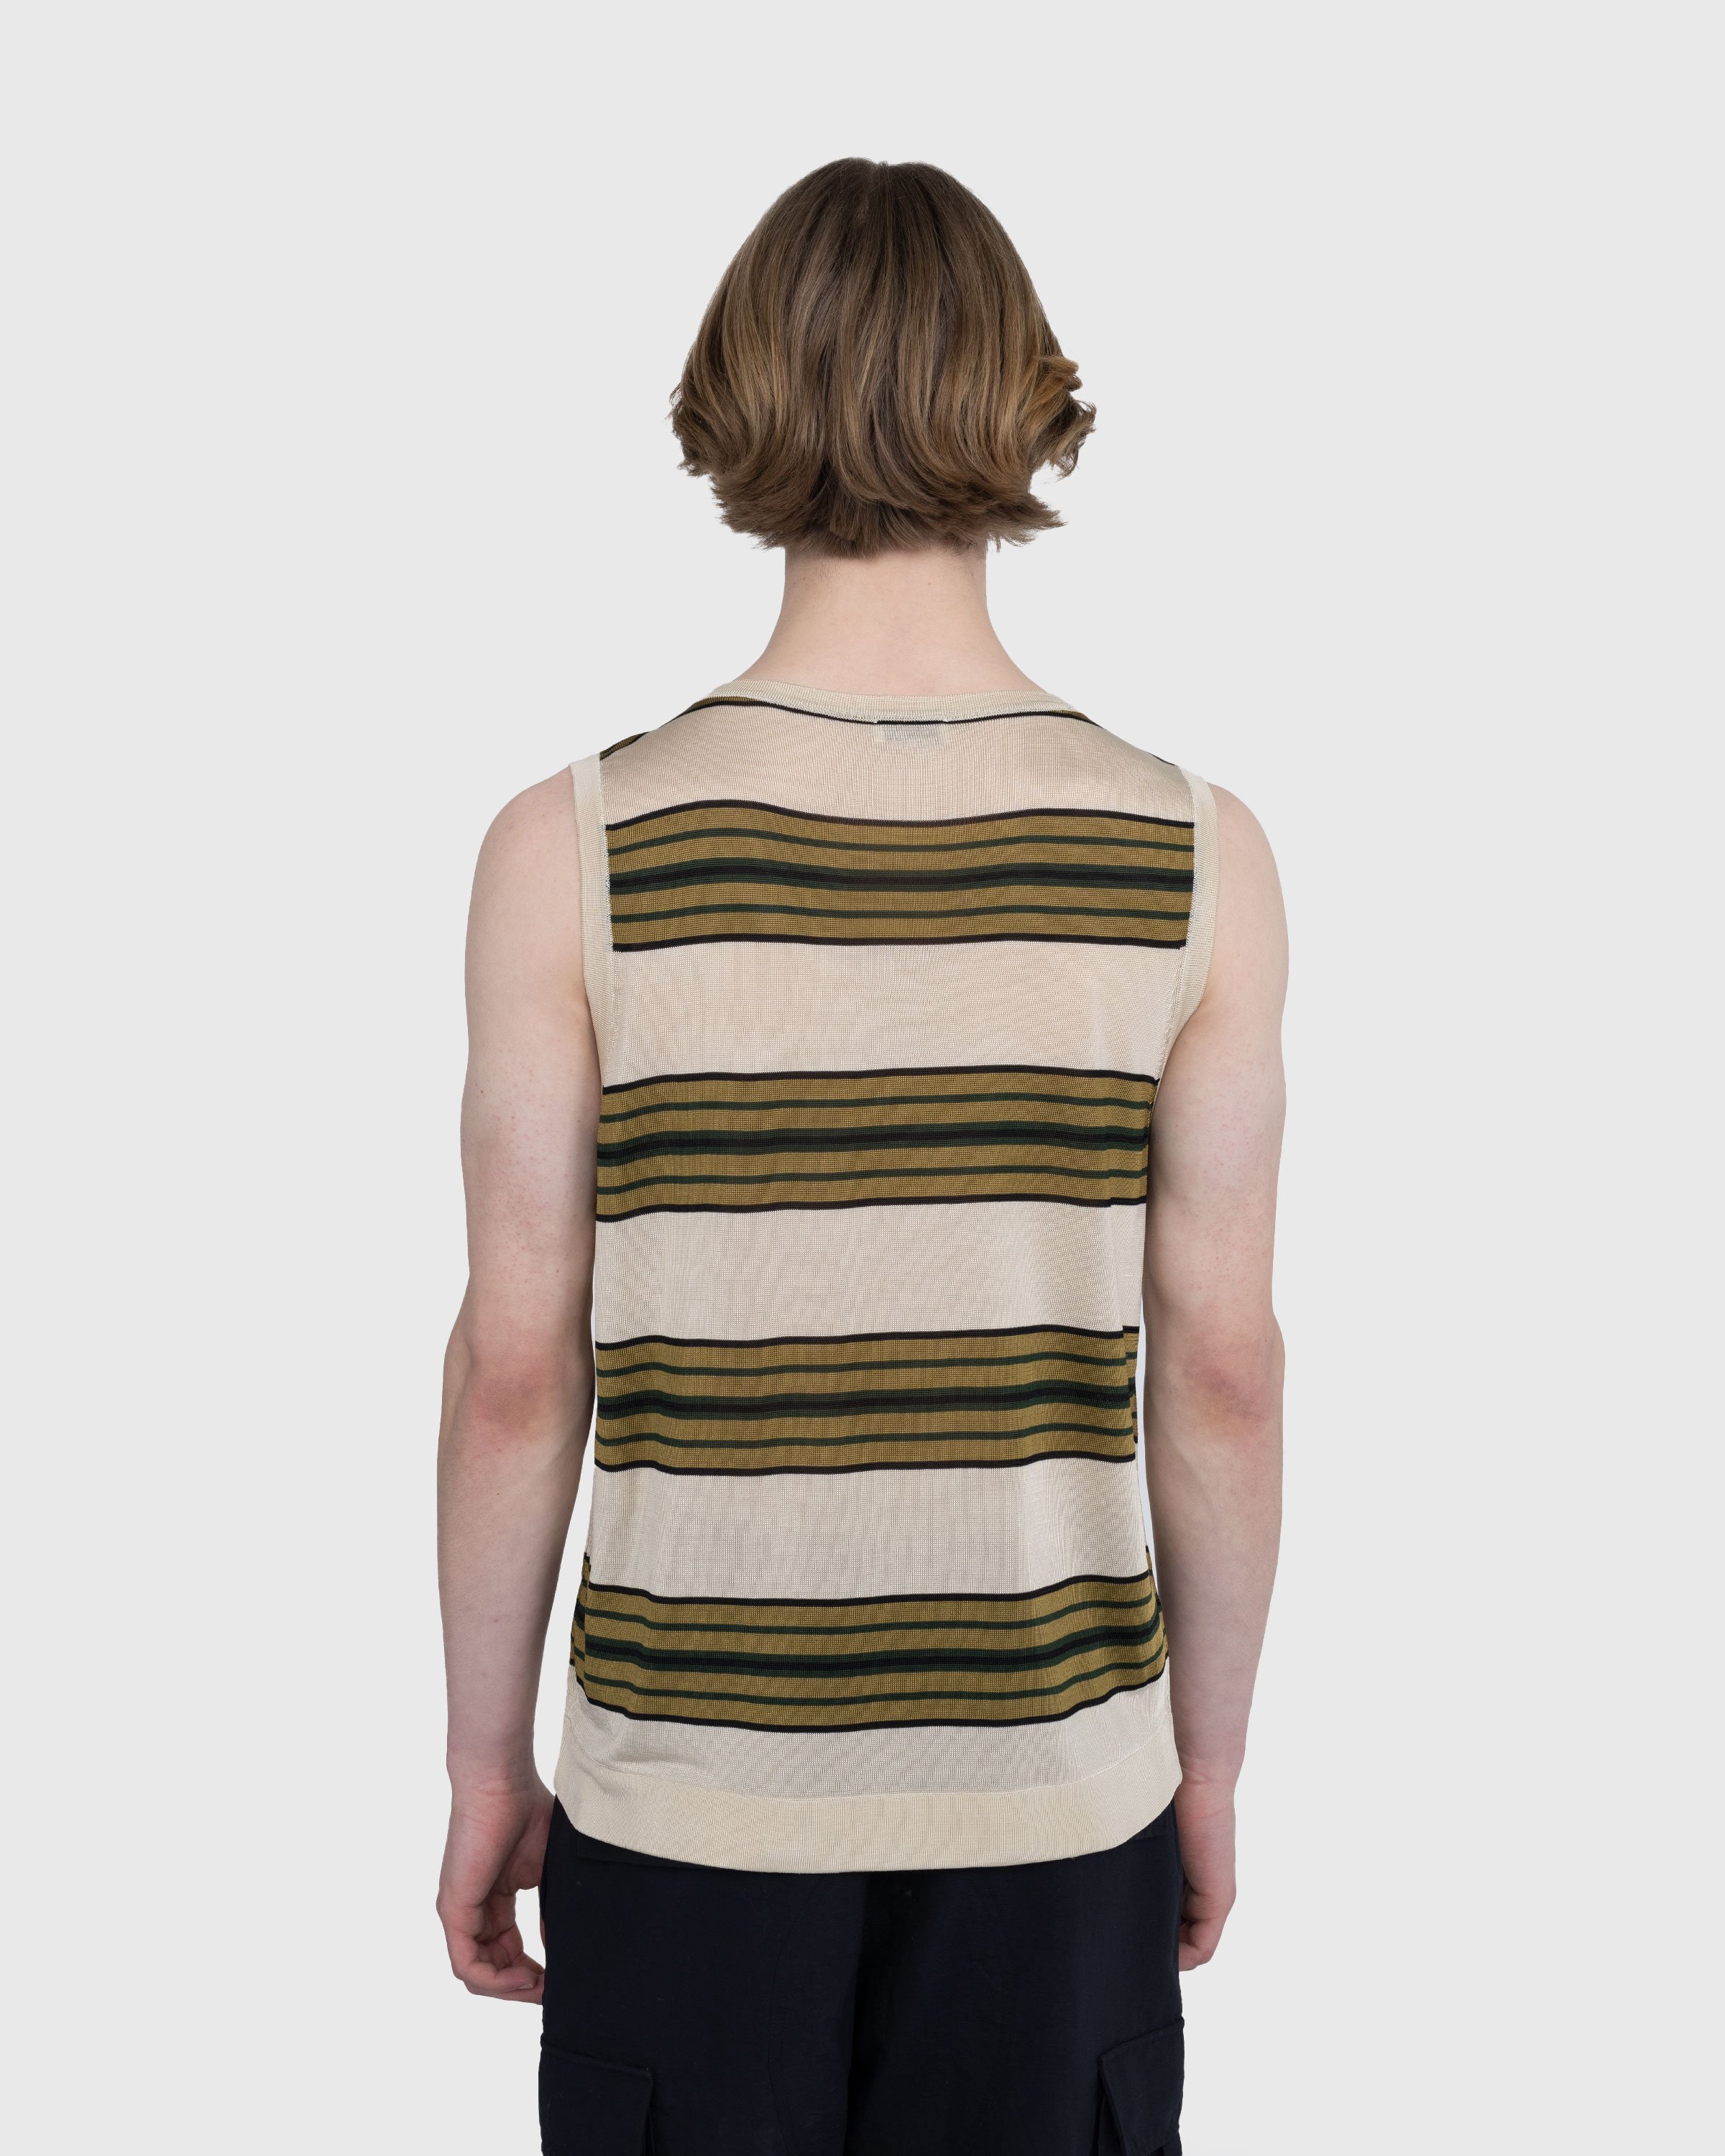 Dries van Noten - Milenco Striped Tank Top Vanille - Clothing - Beige - Image 3